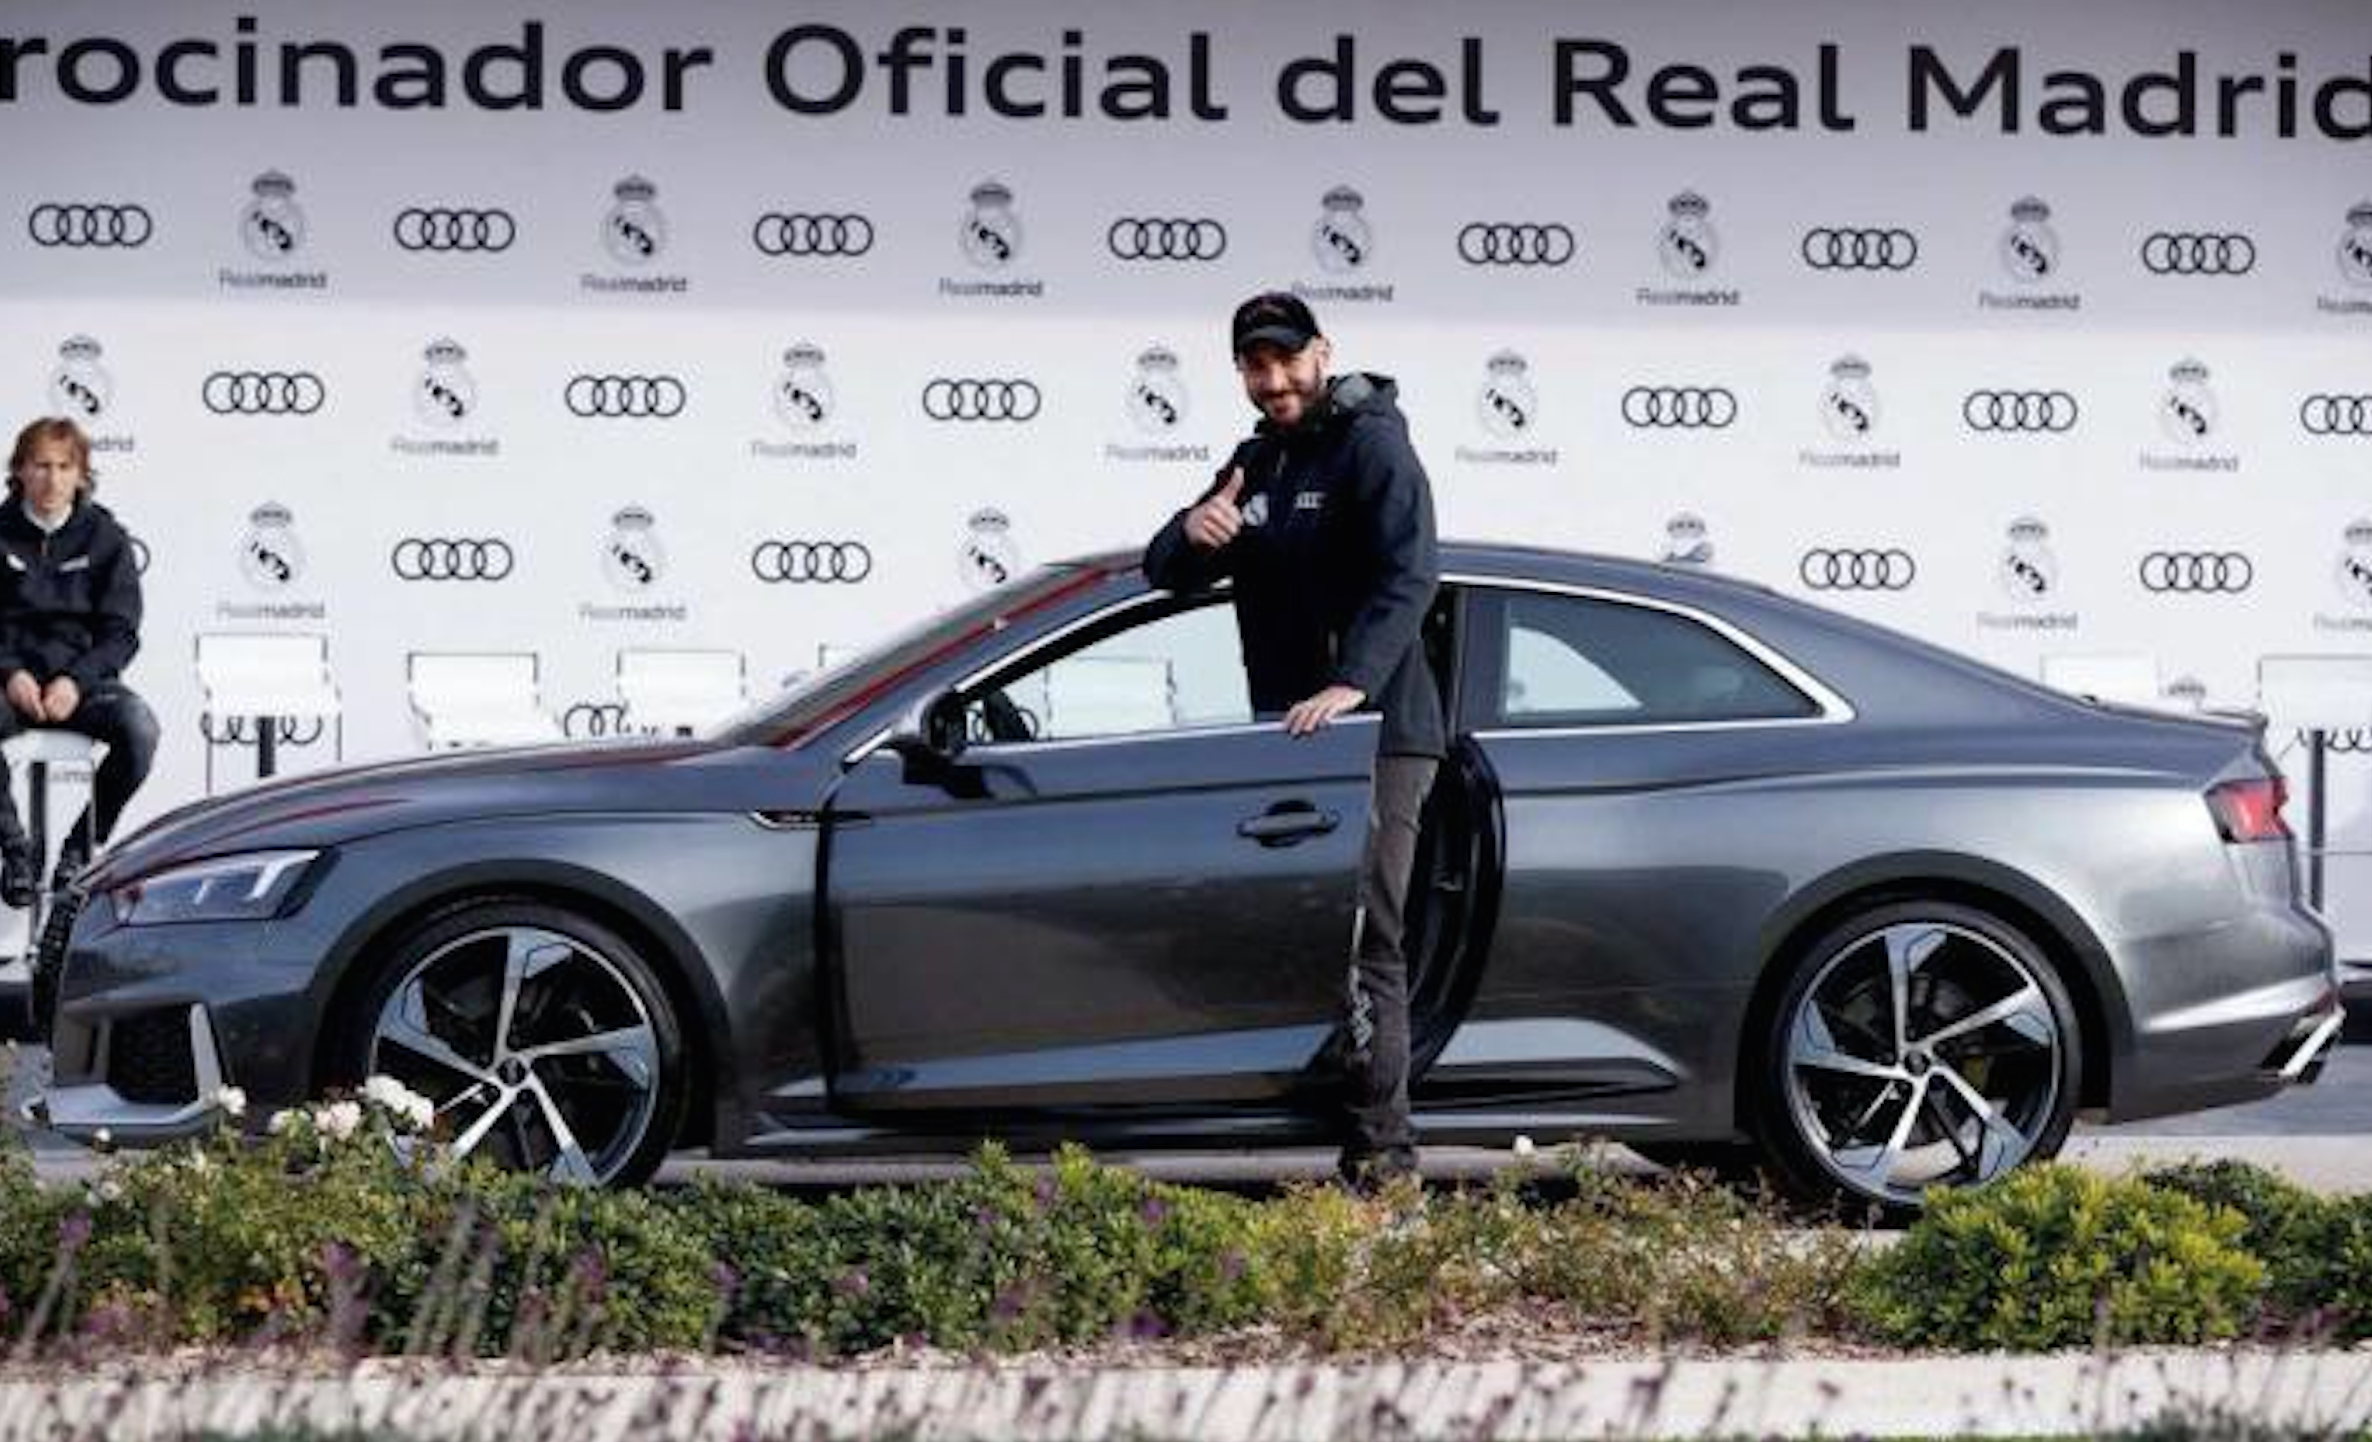 Benzema Audi Real Madrid